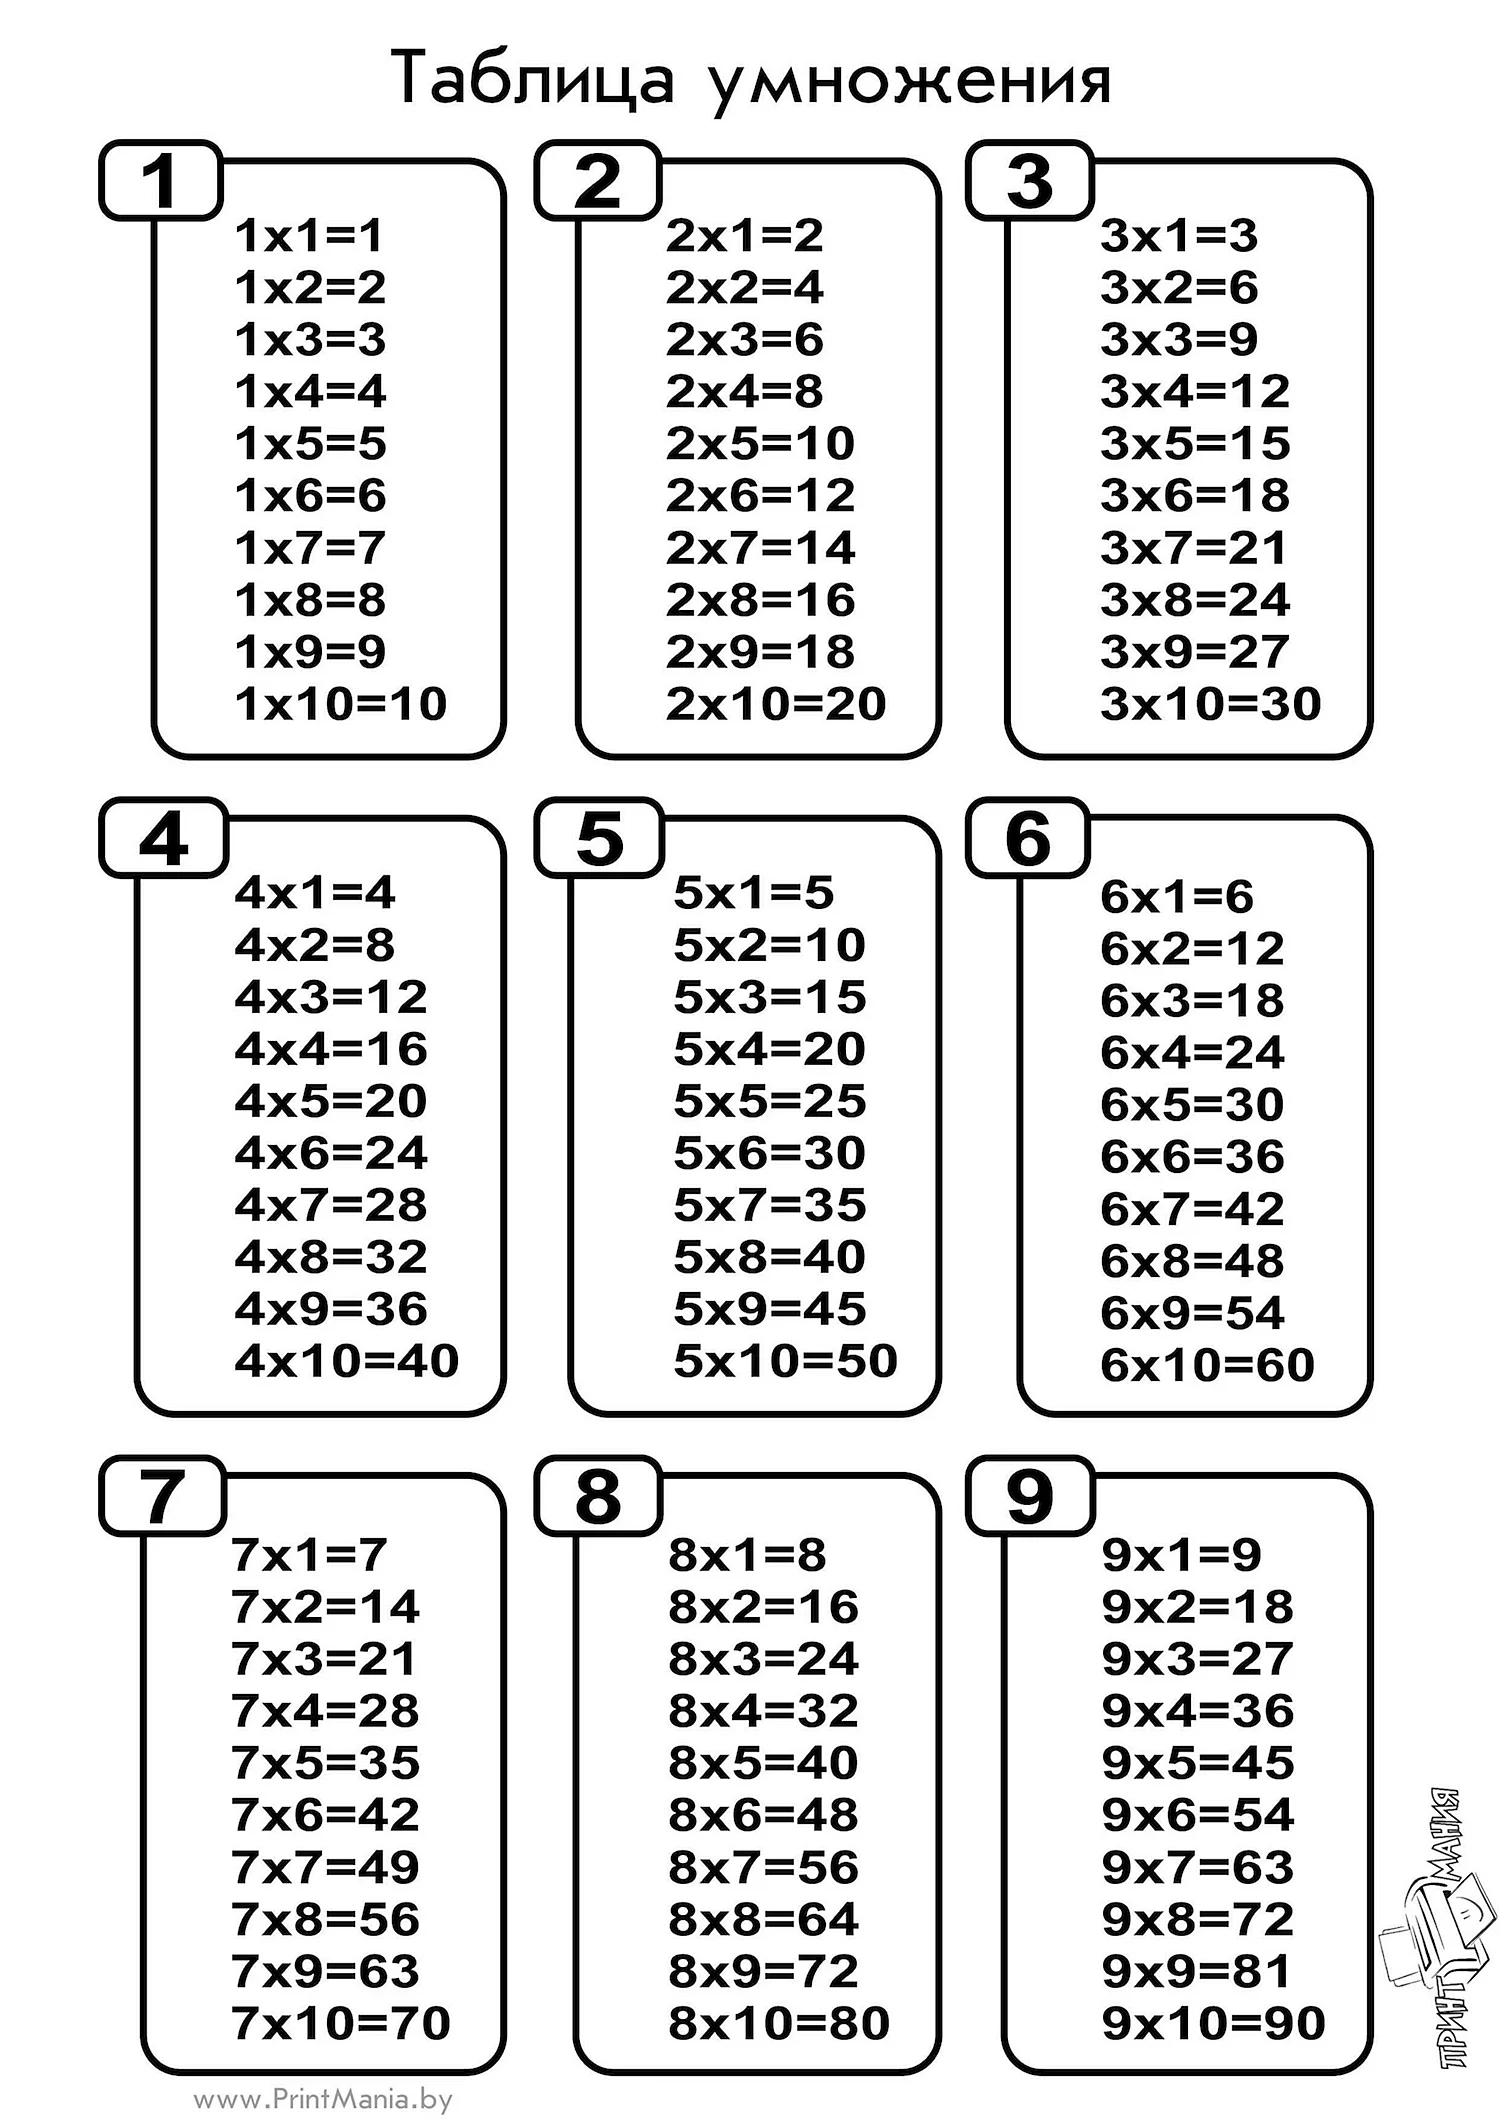 Таблица умножения а4 для печати